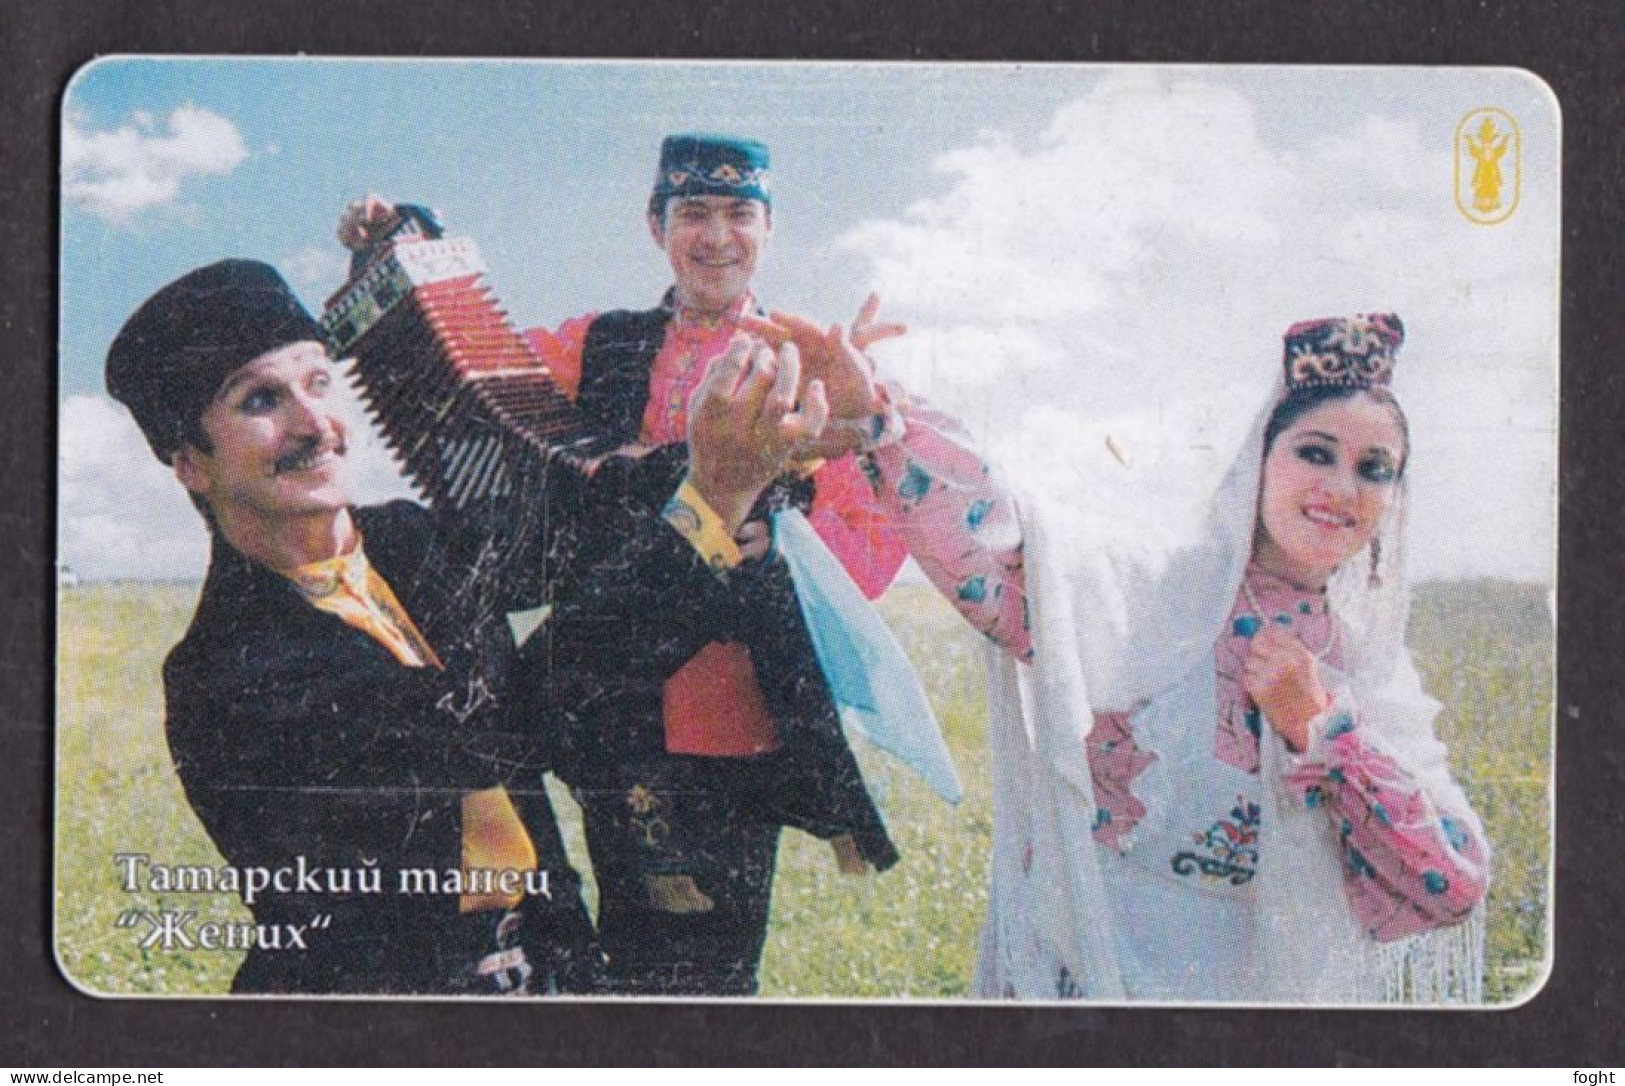 2002 Russia Bashinformsvyaz-Ufa,Tatar Dance "Bridegroom",90 Units Card,Col:RU-BIS-V-006 - Rusland